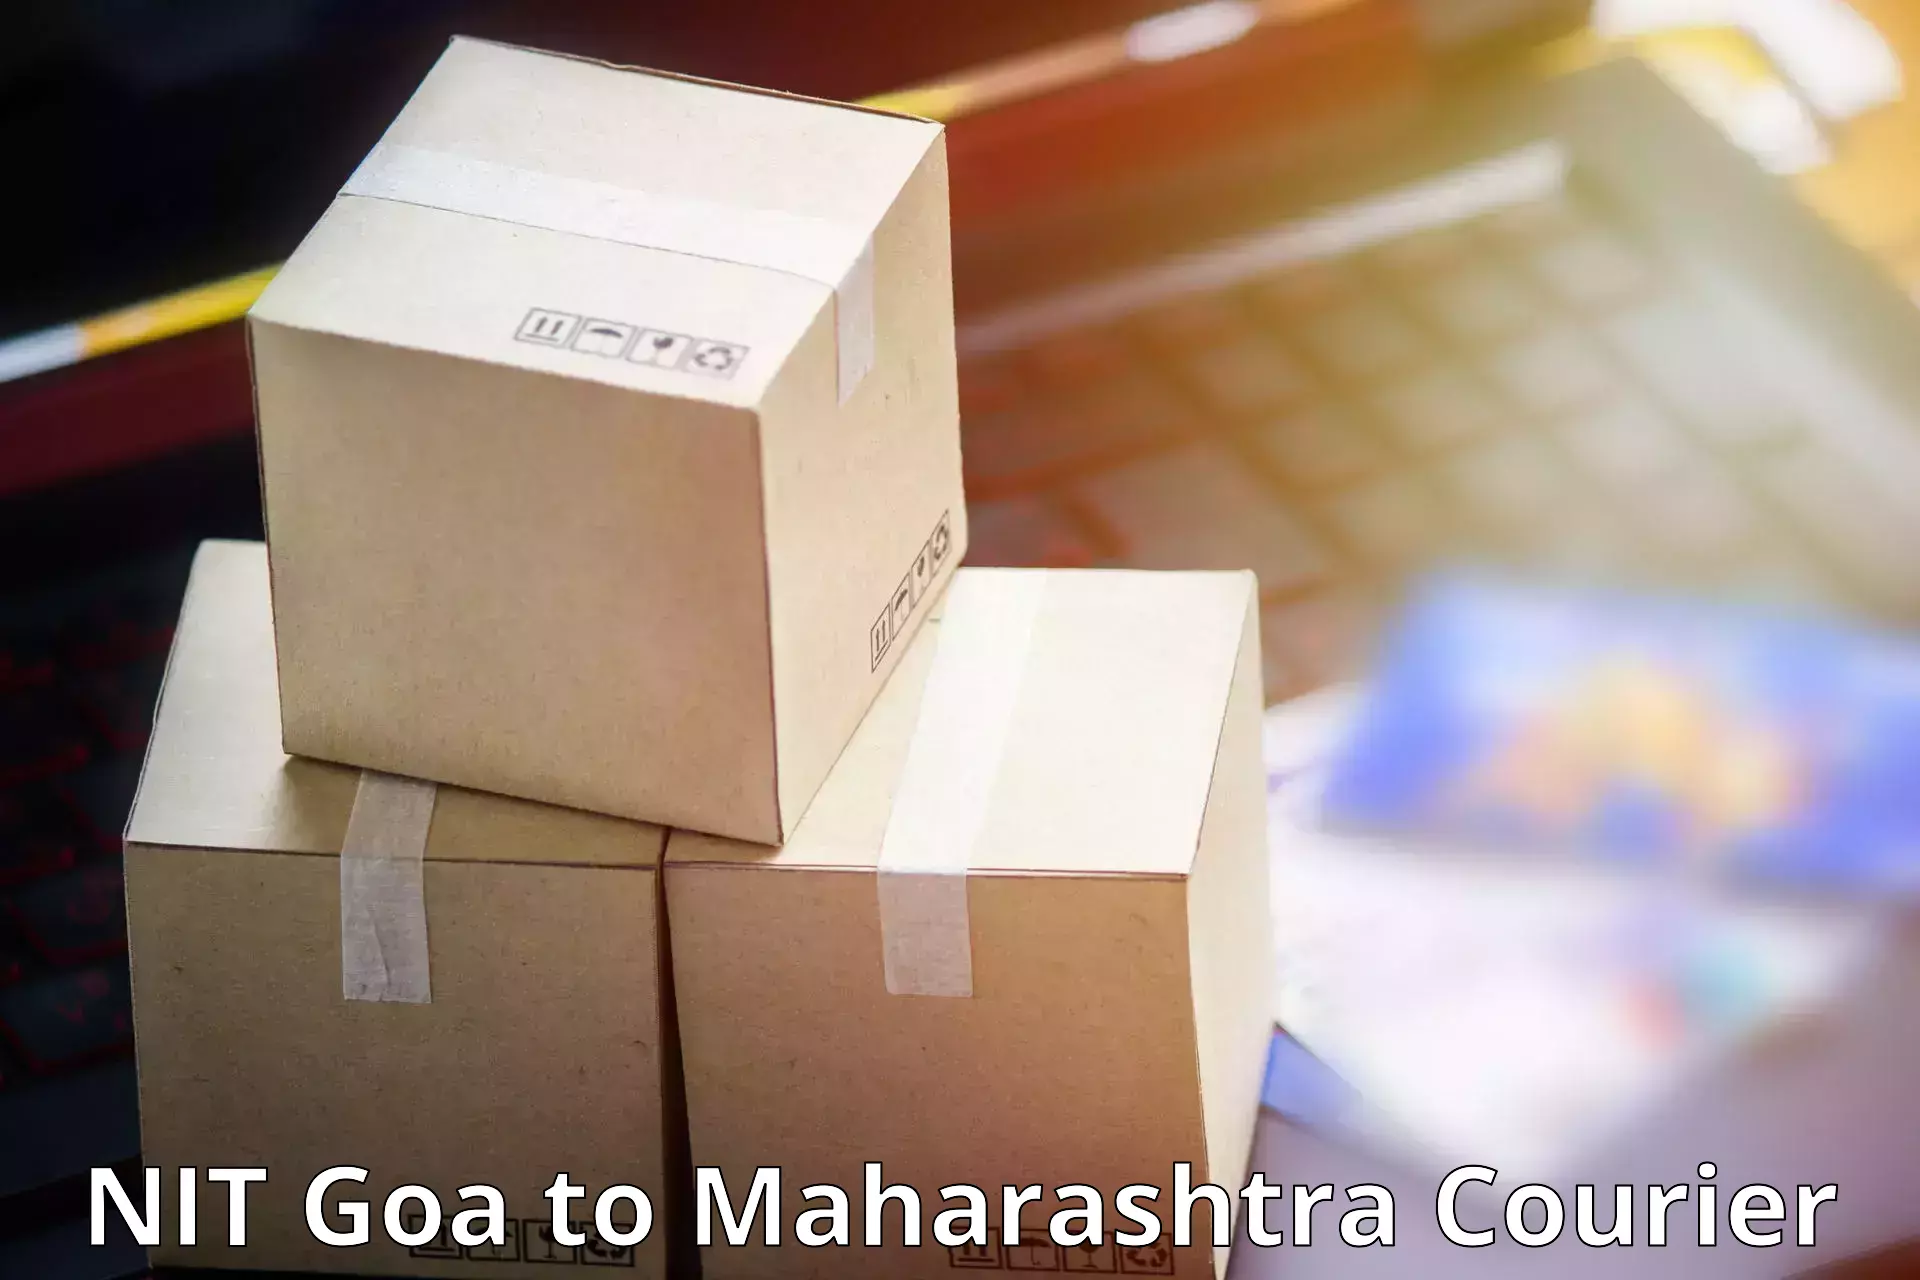 Express delivery network NIT Goa to Walchandnagar